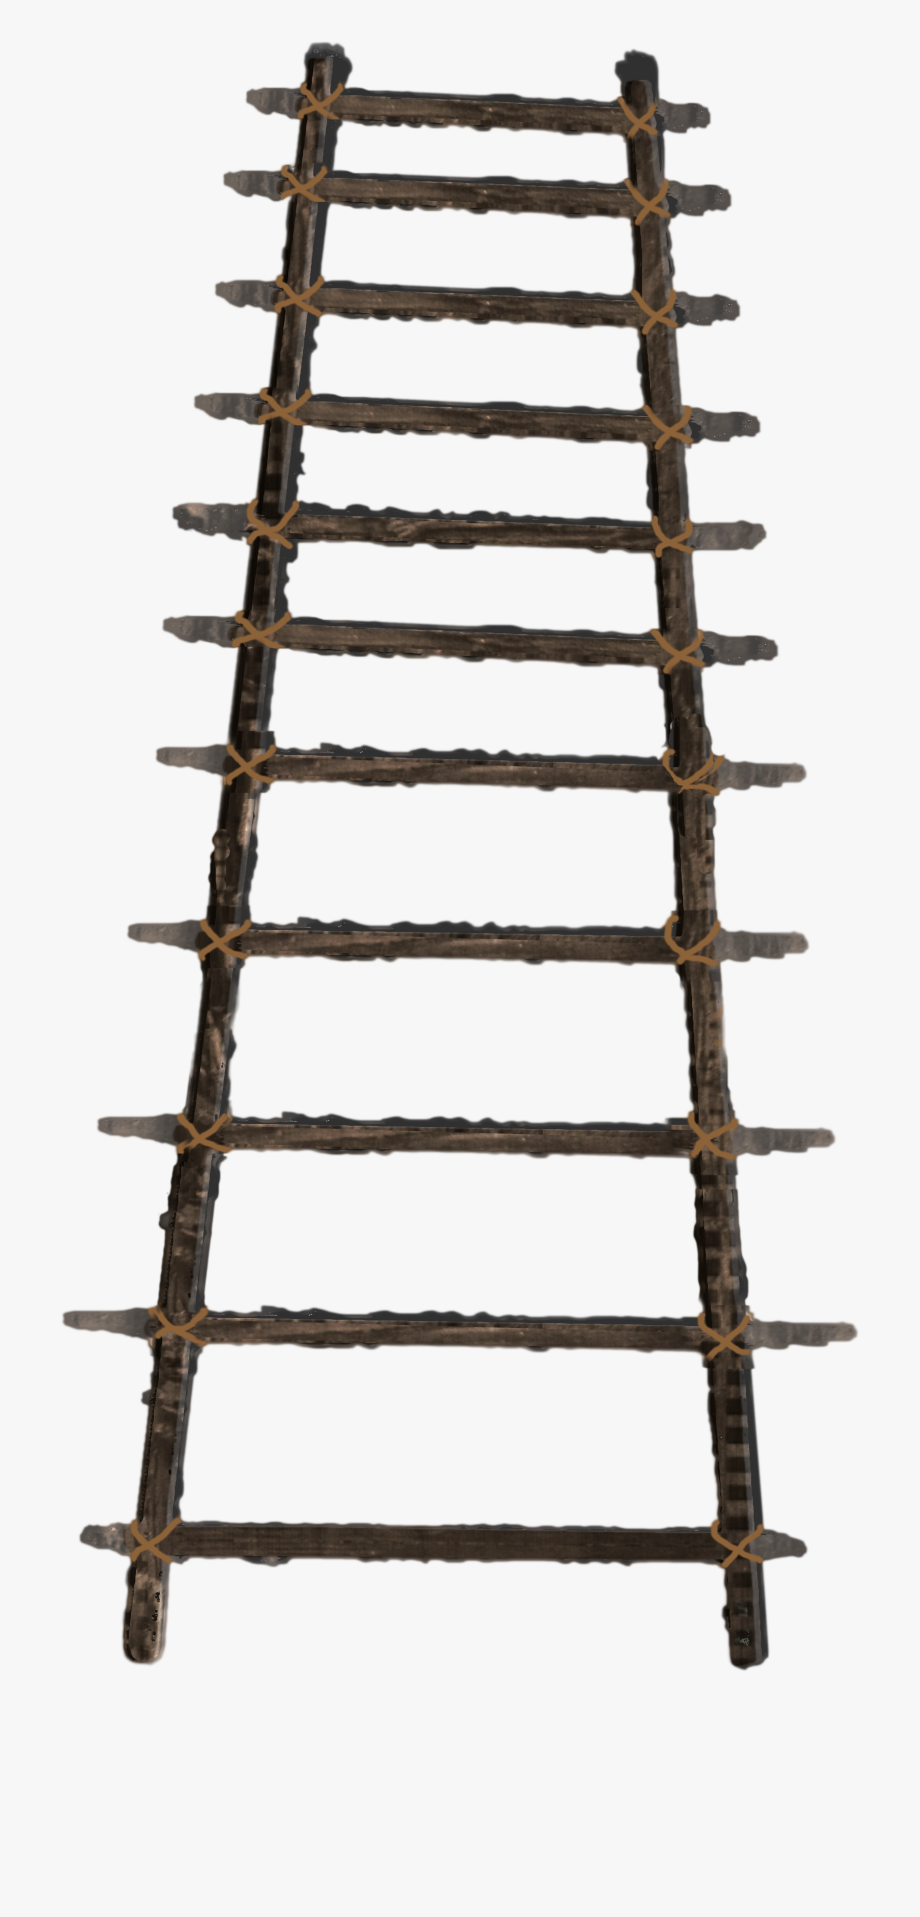 ladder clipart stock